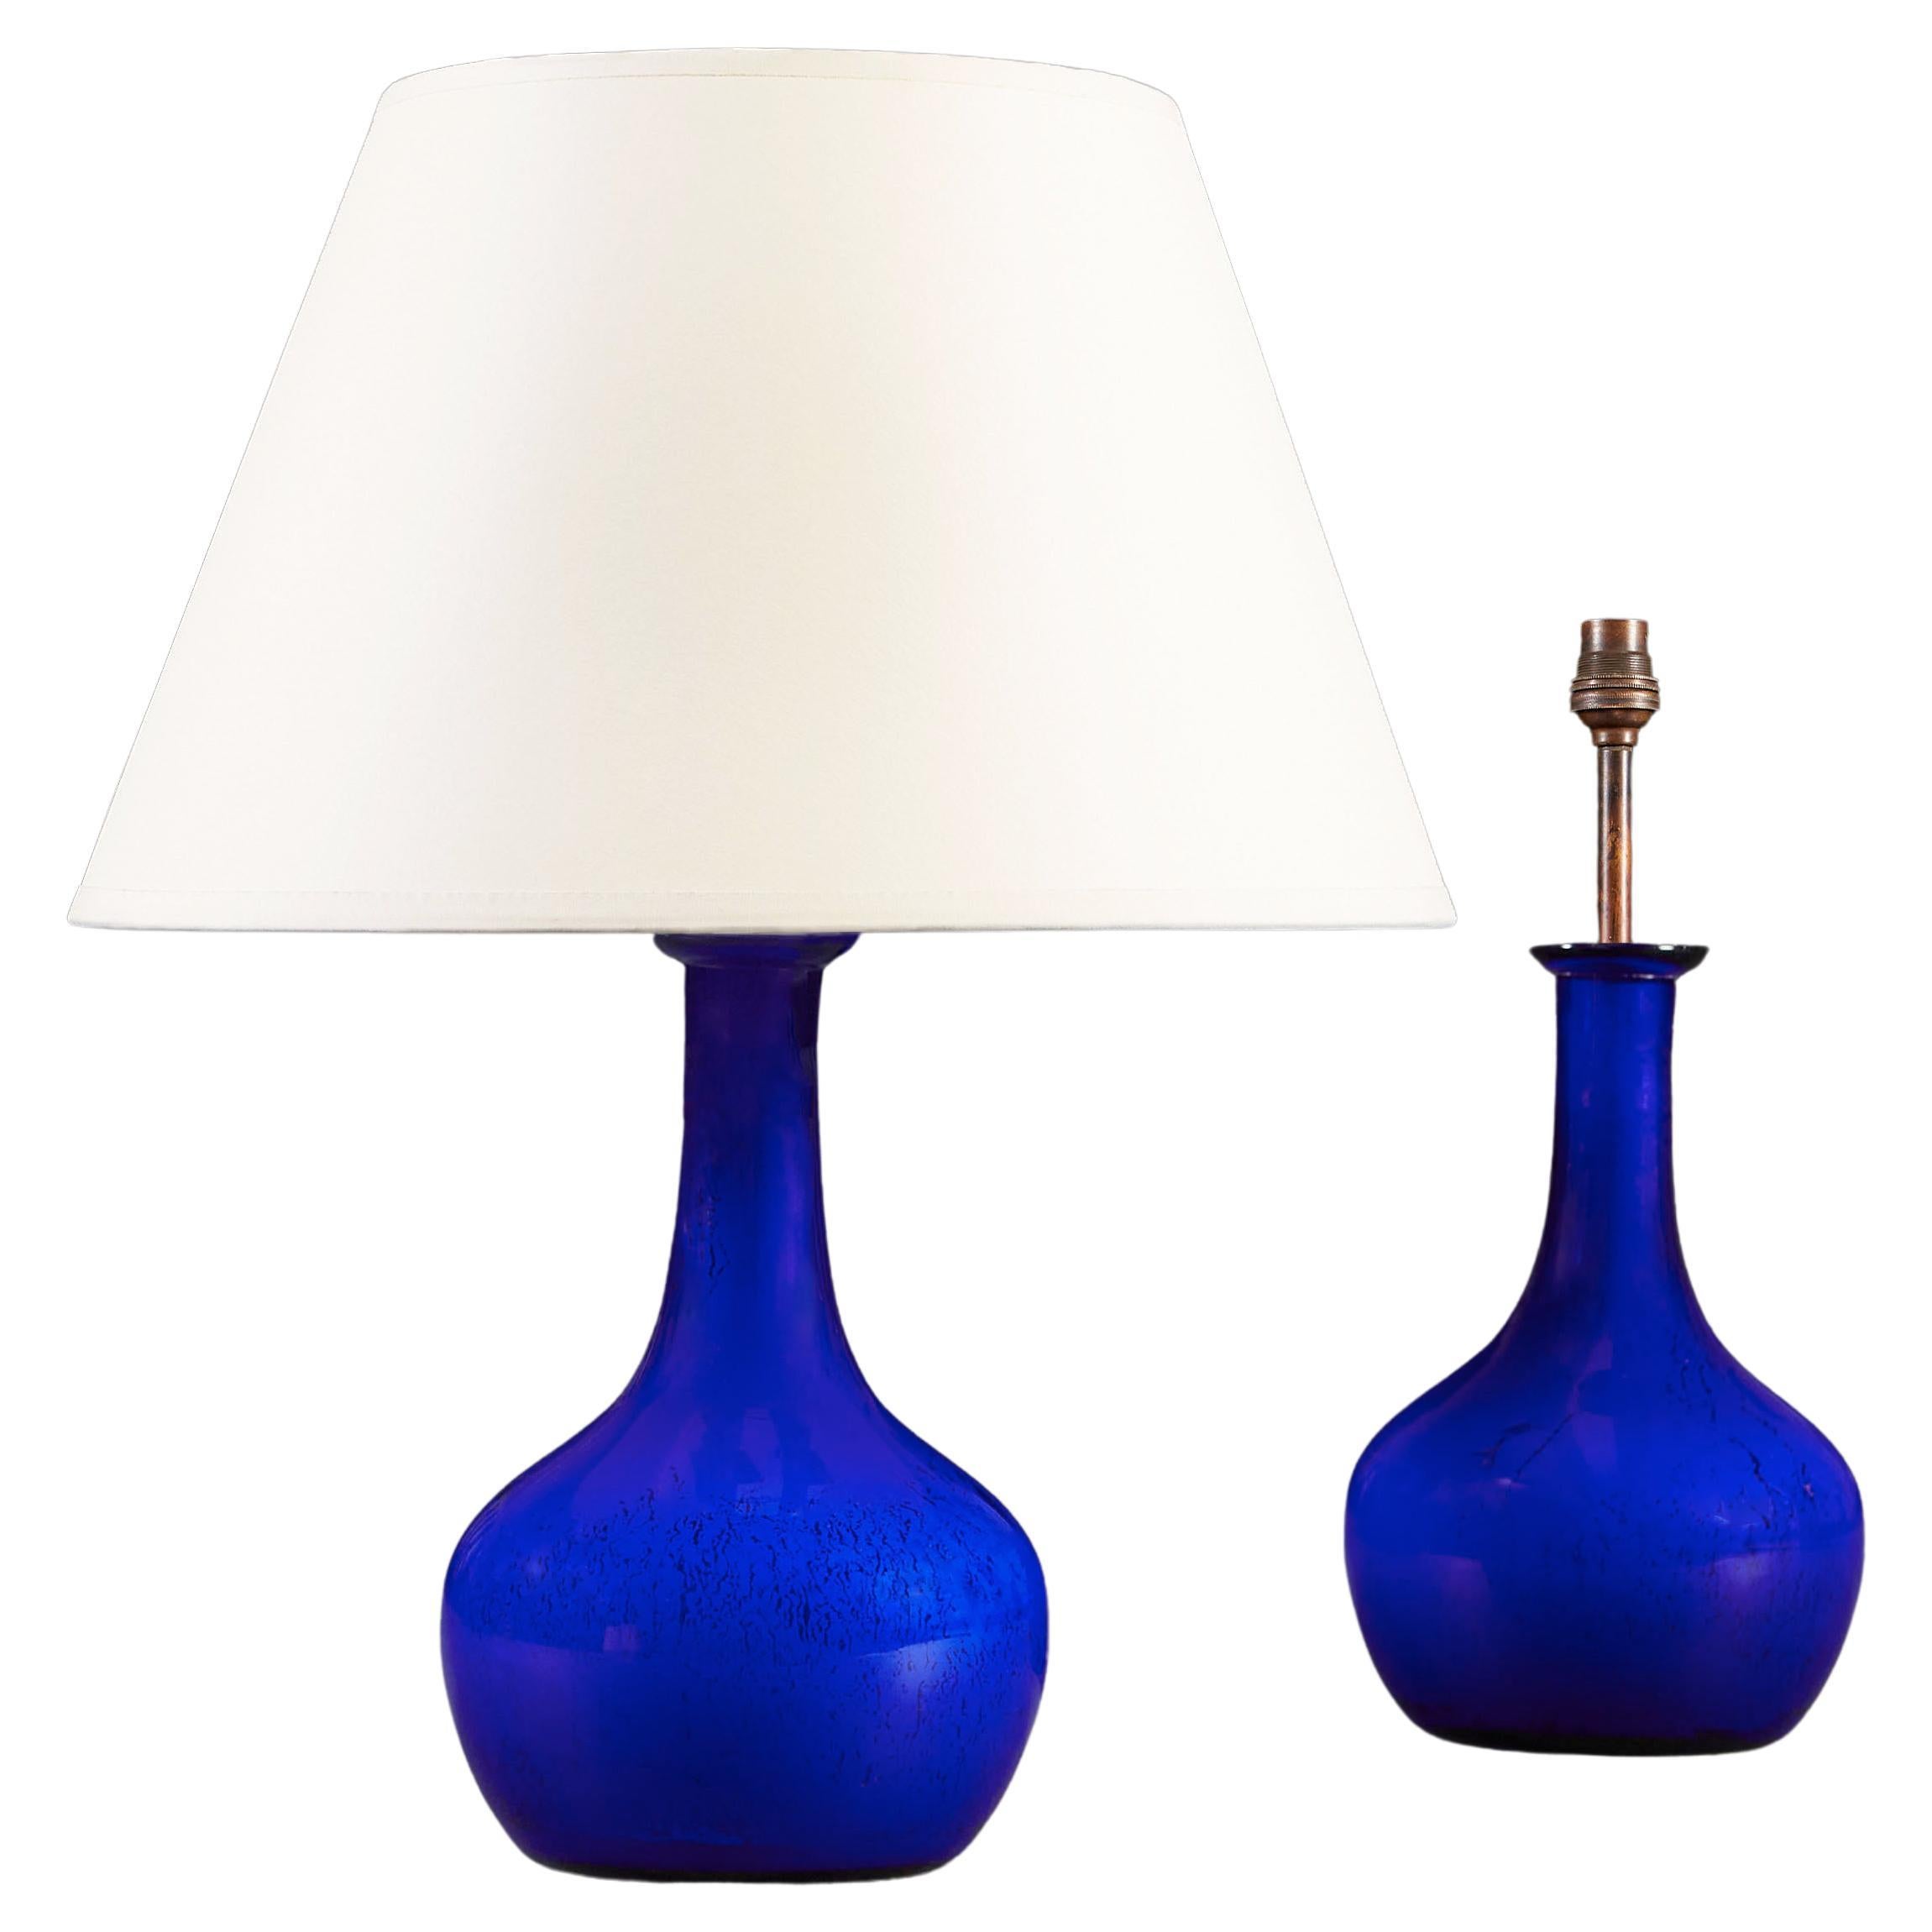 A Pair of Cobalt Blue Glass Bottle Table Lamps